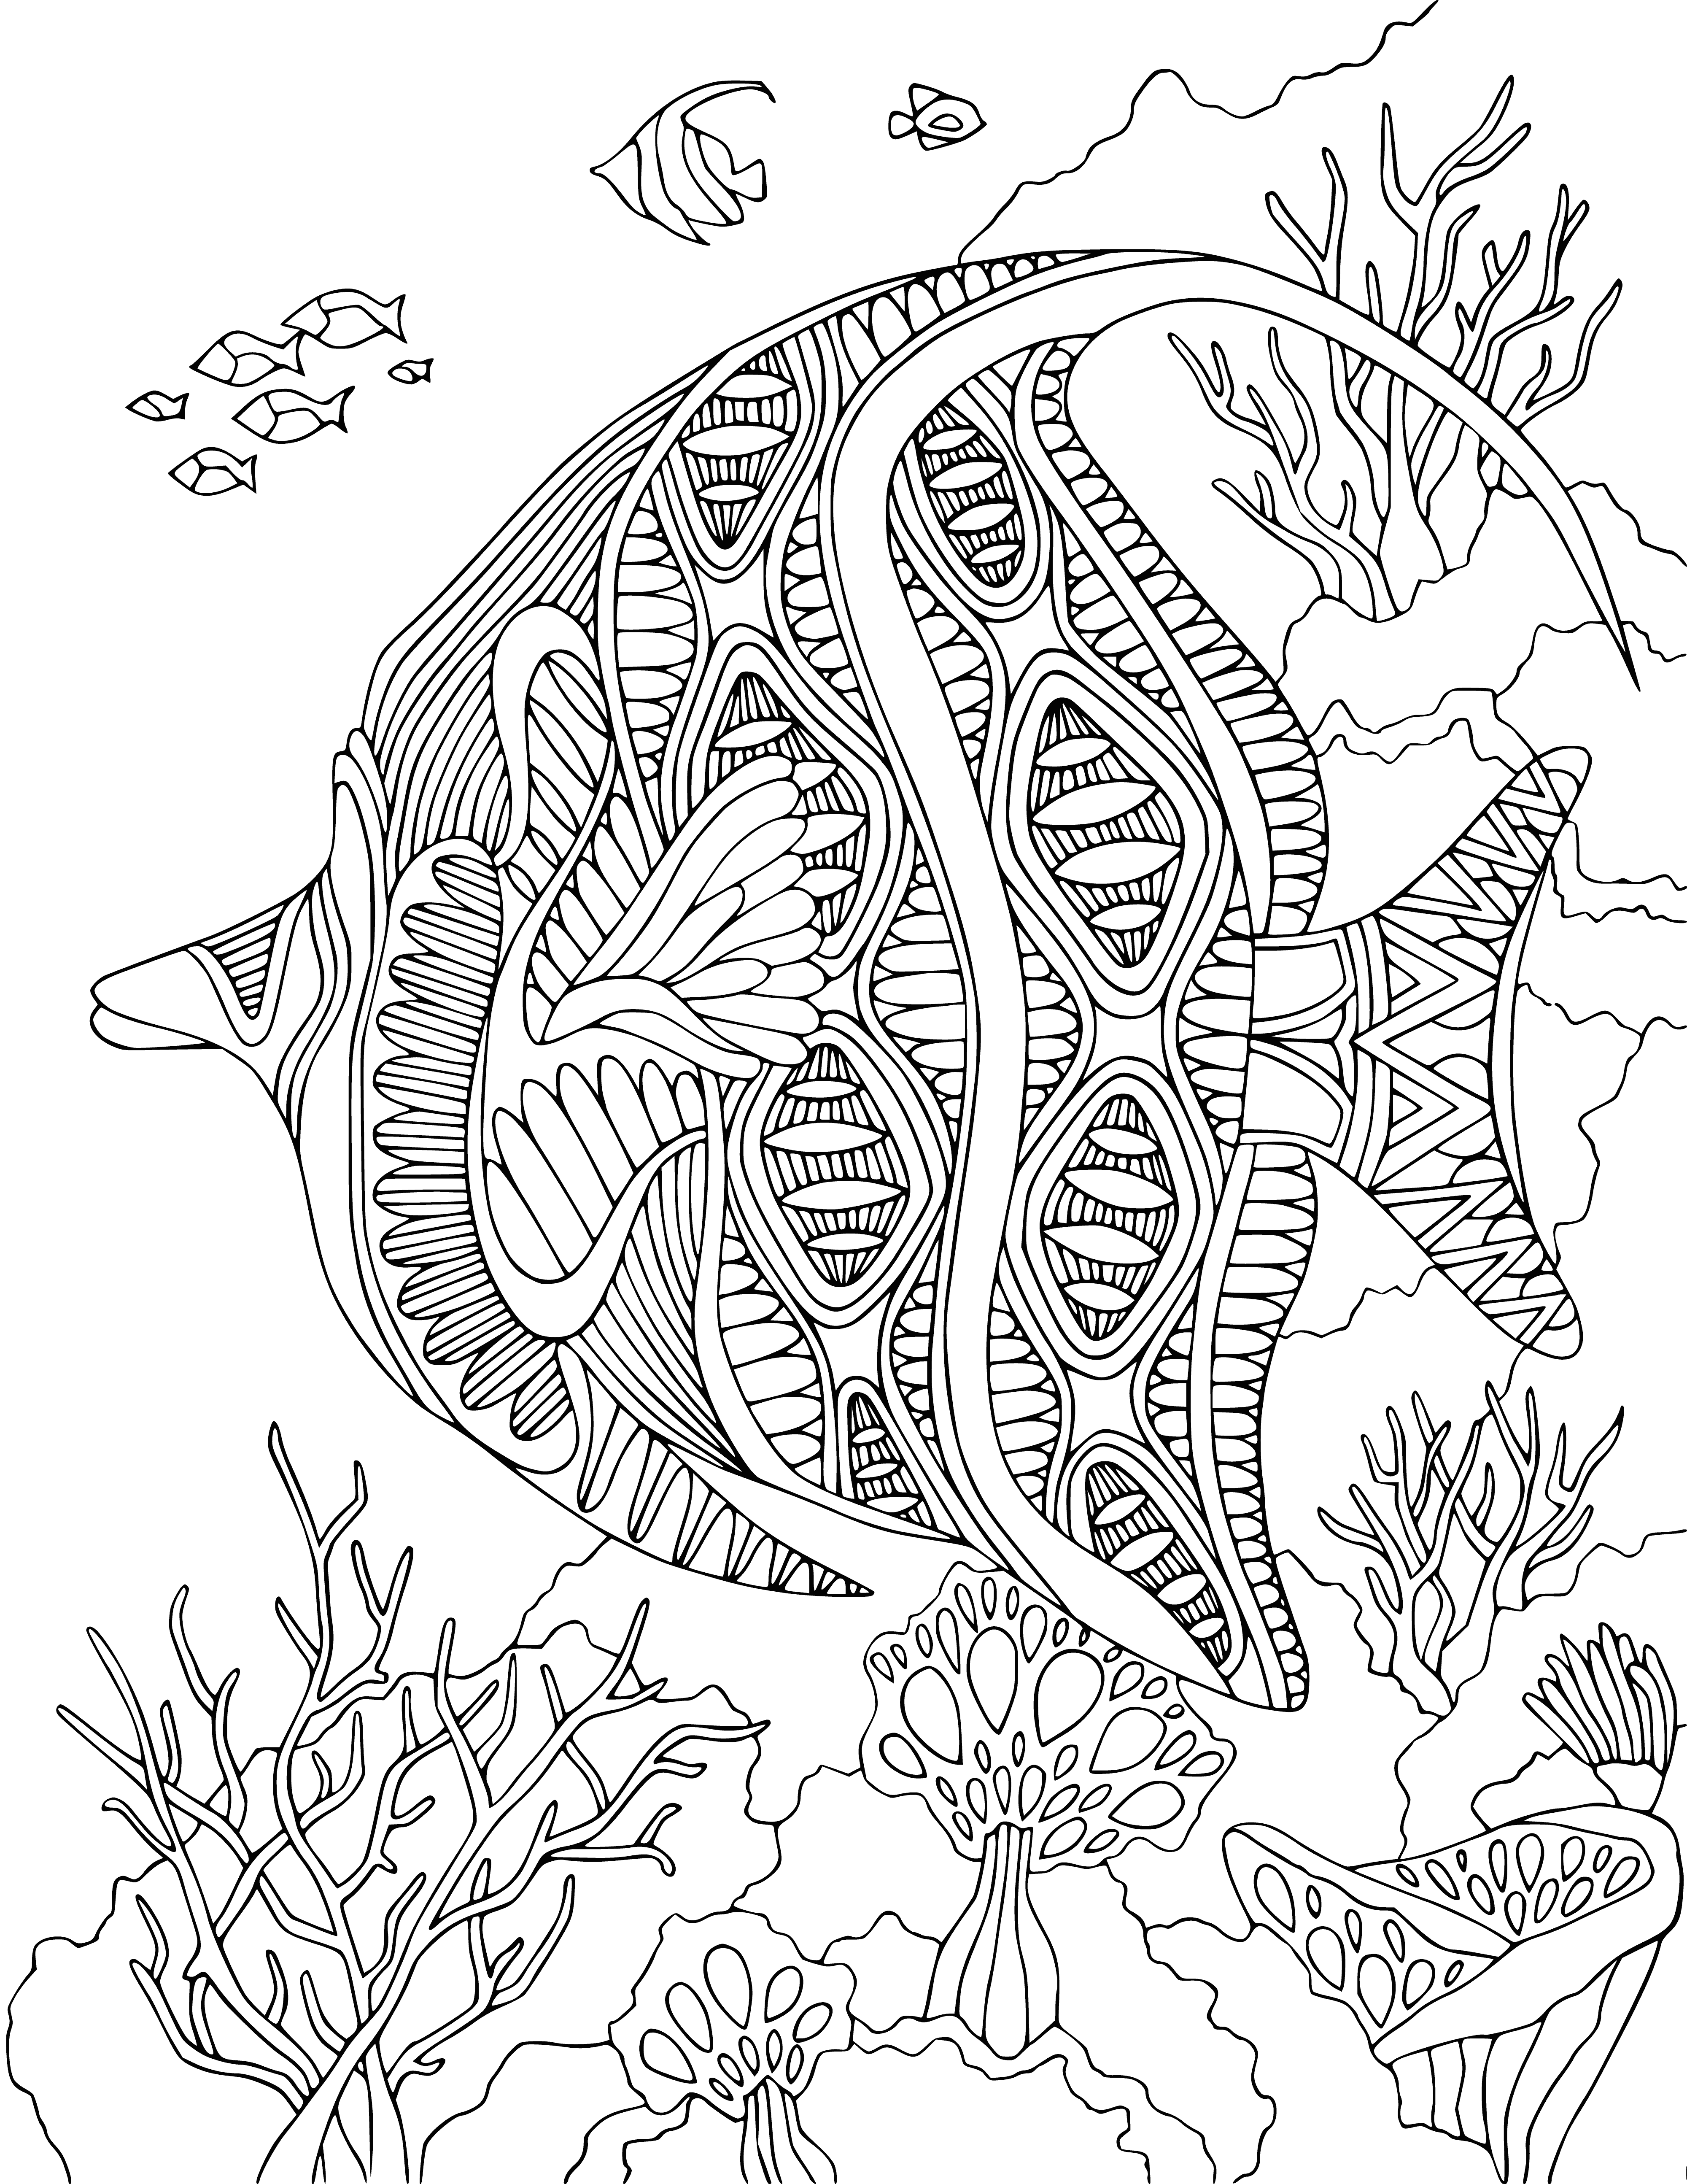 Sea fish coloring page